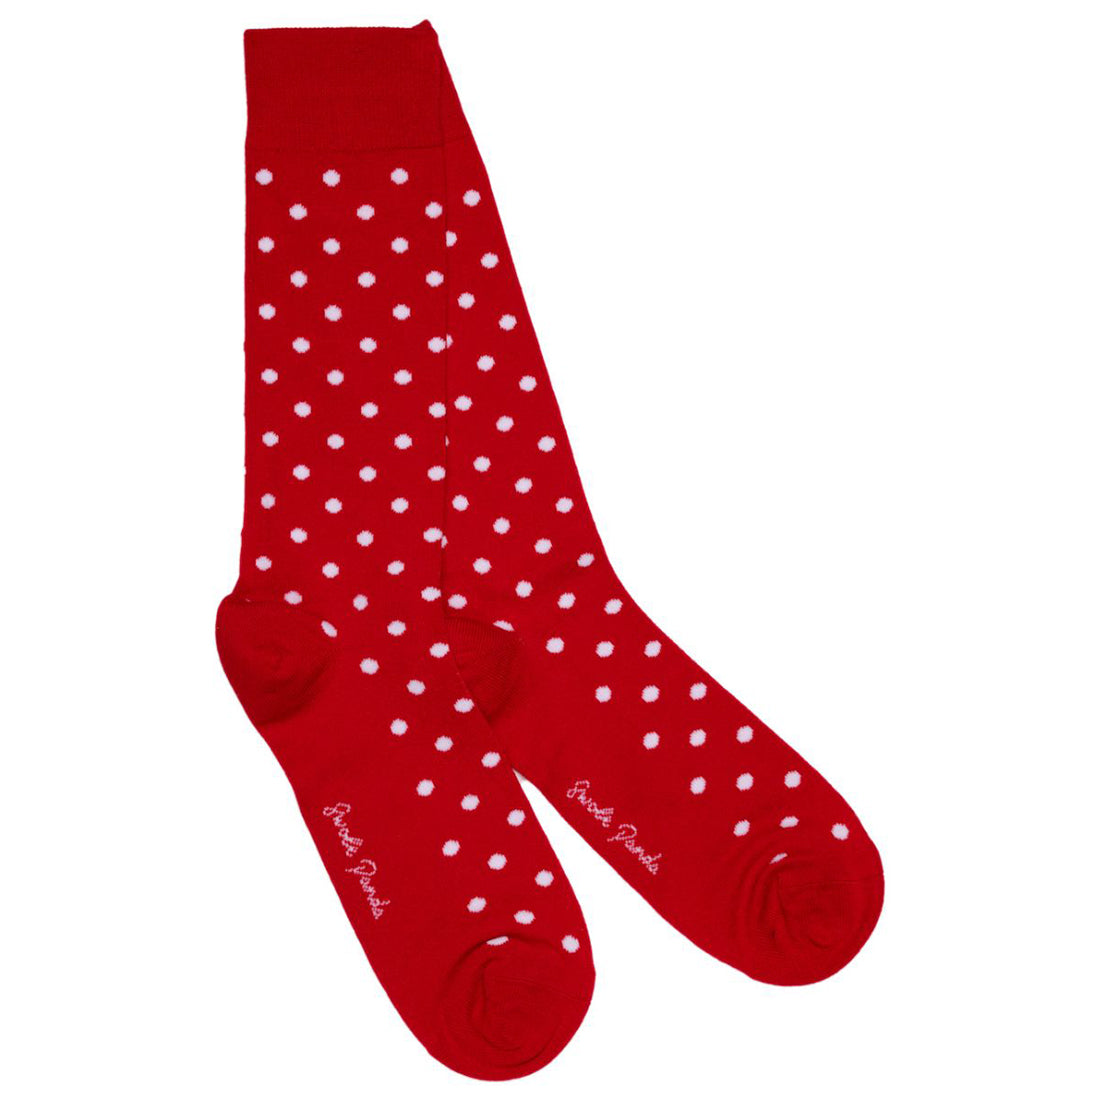 socks-red-polka-dot-bamboo-socks-1.jpg